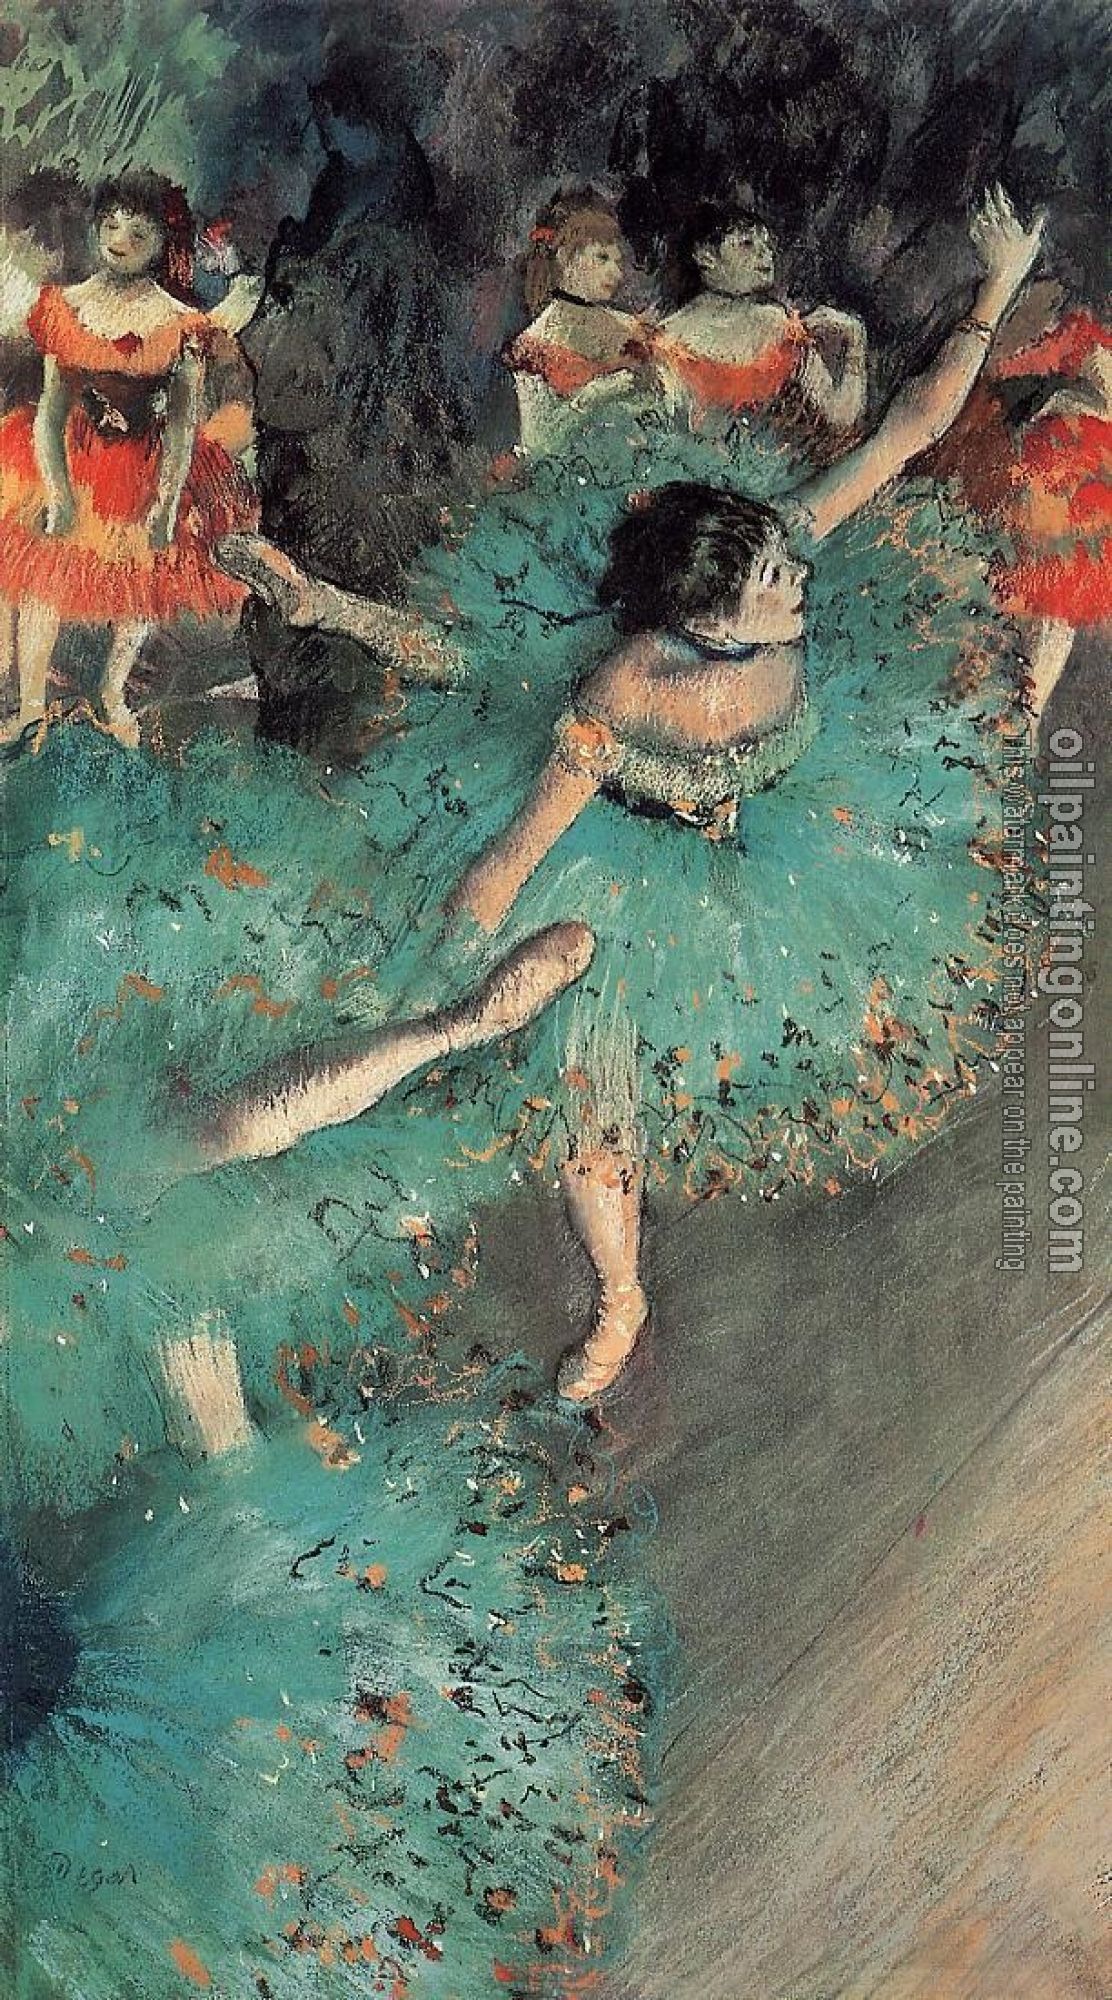 Degas, Edgar - The Green Dancer